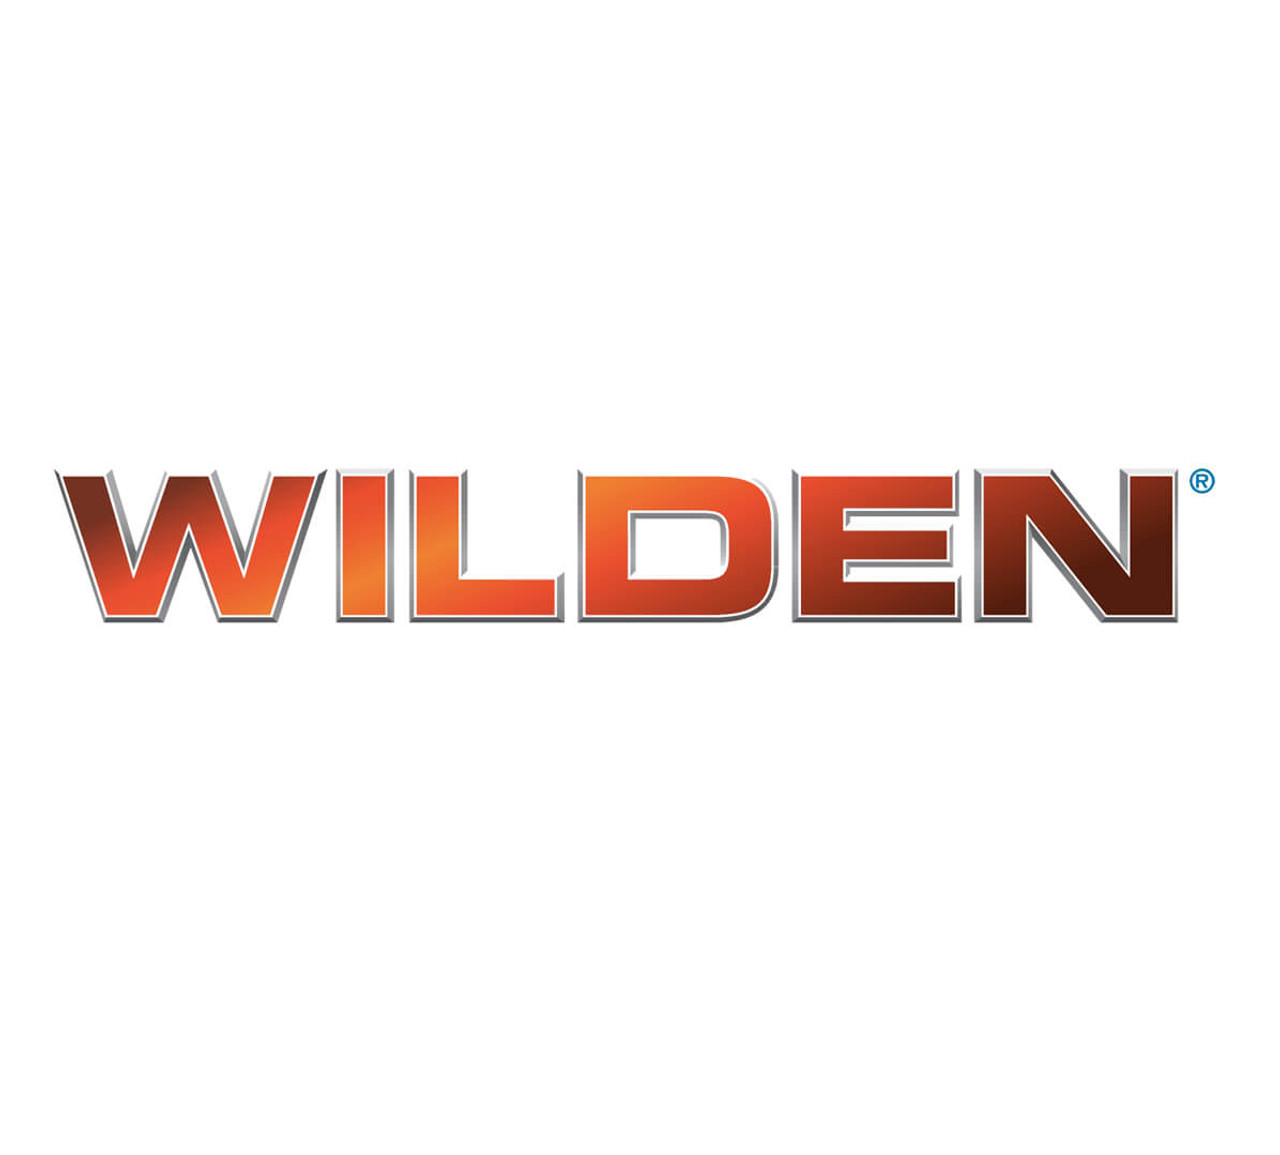 Wilden Wet End Kit 02-9844-55-201